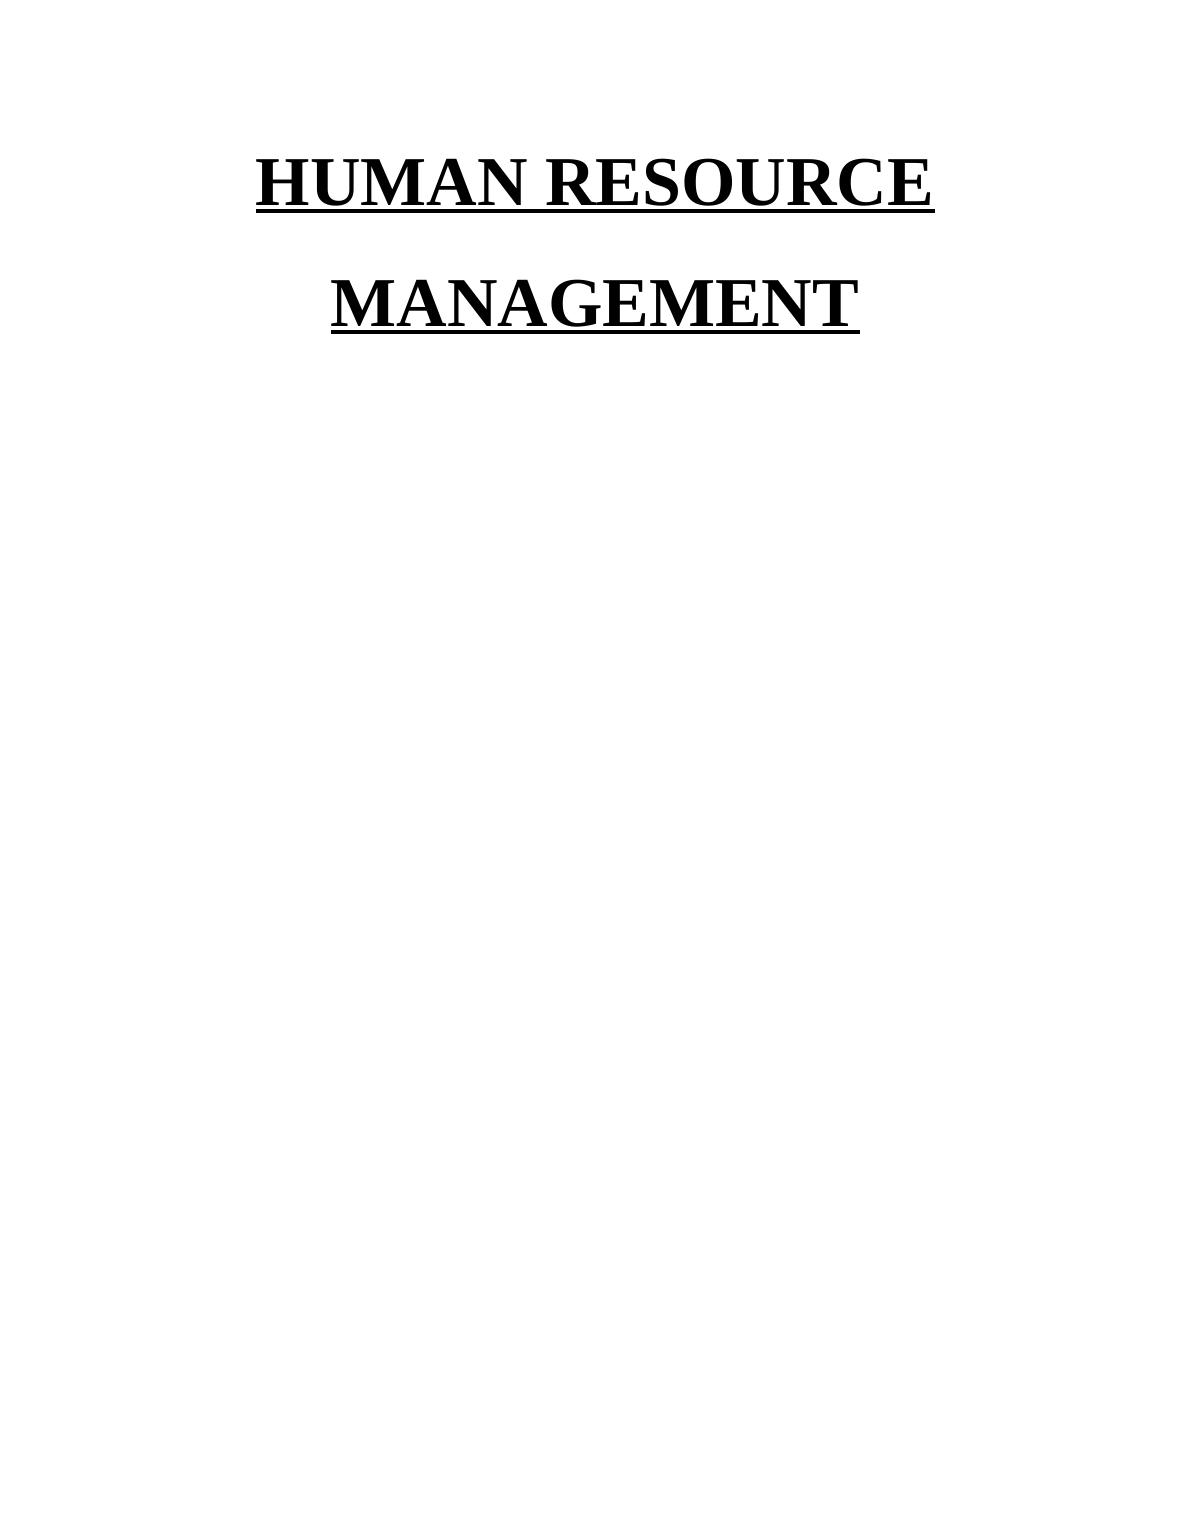 Human Resource Management Application PDF_1